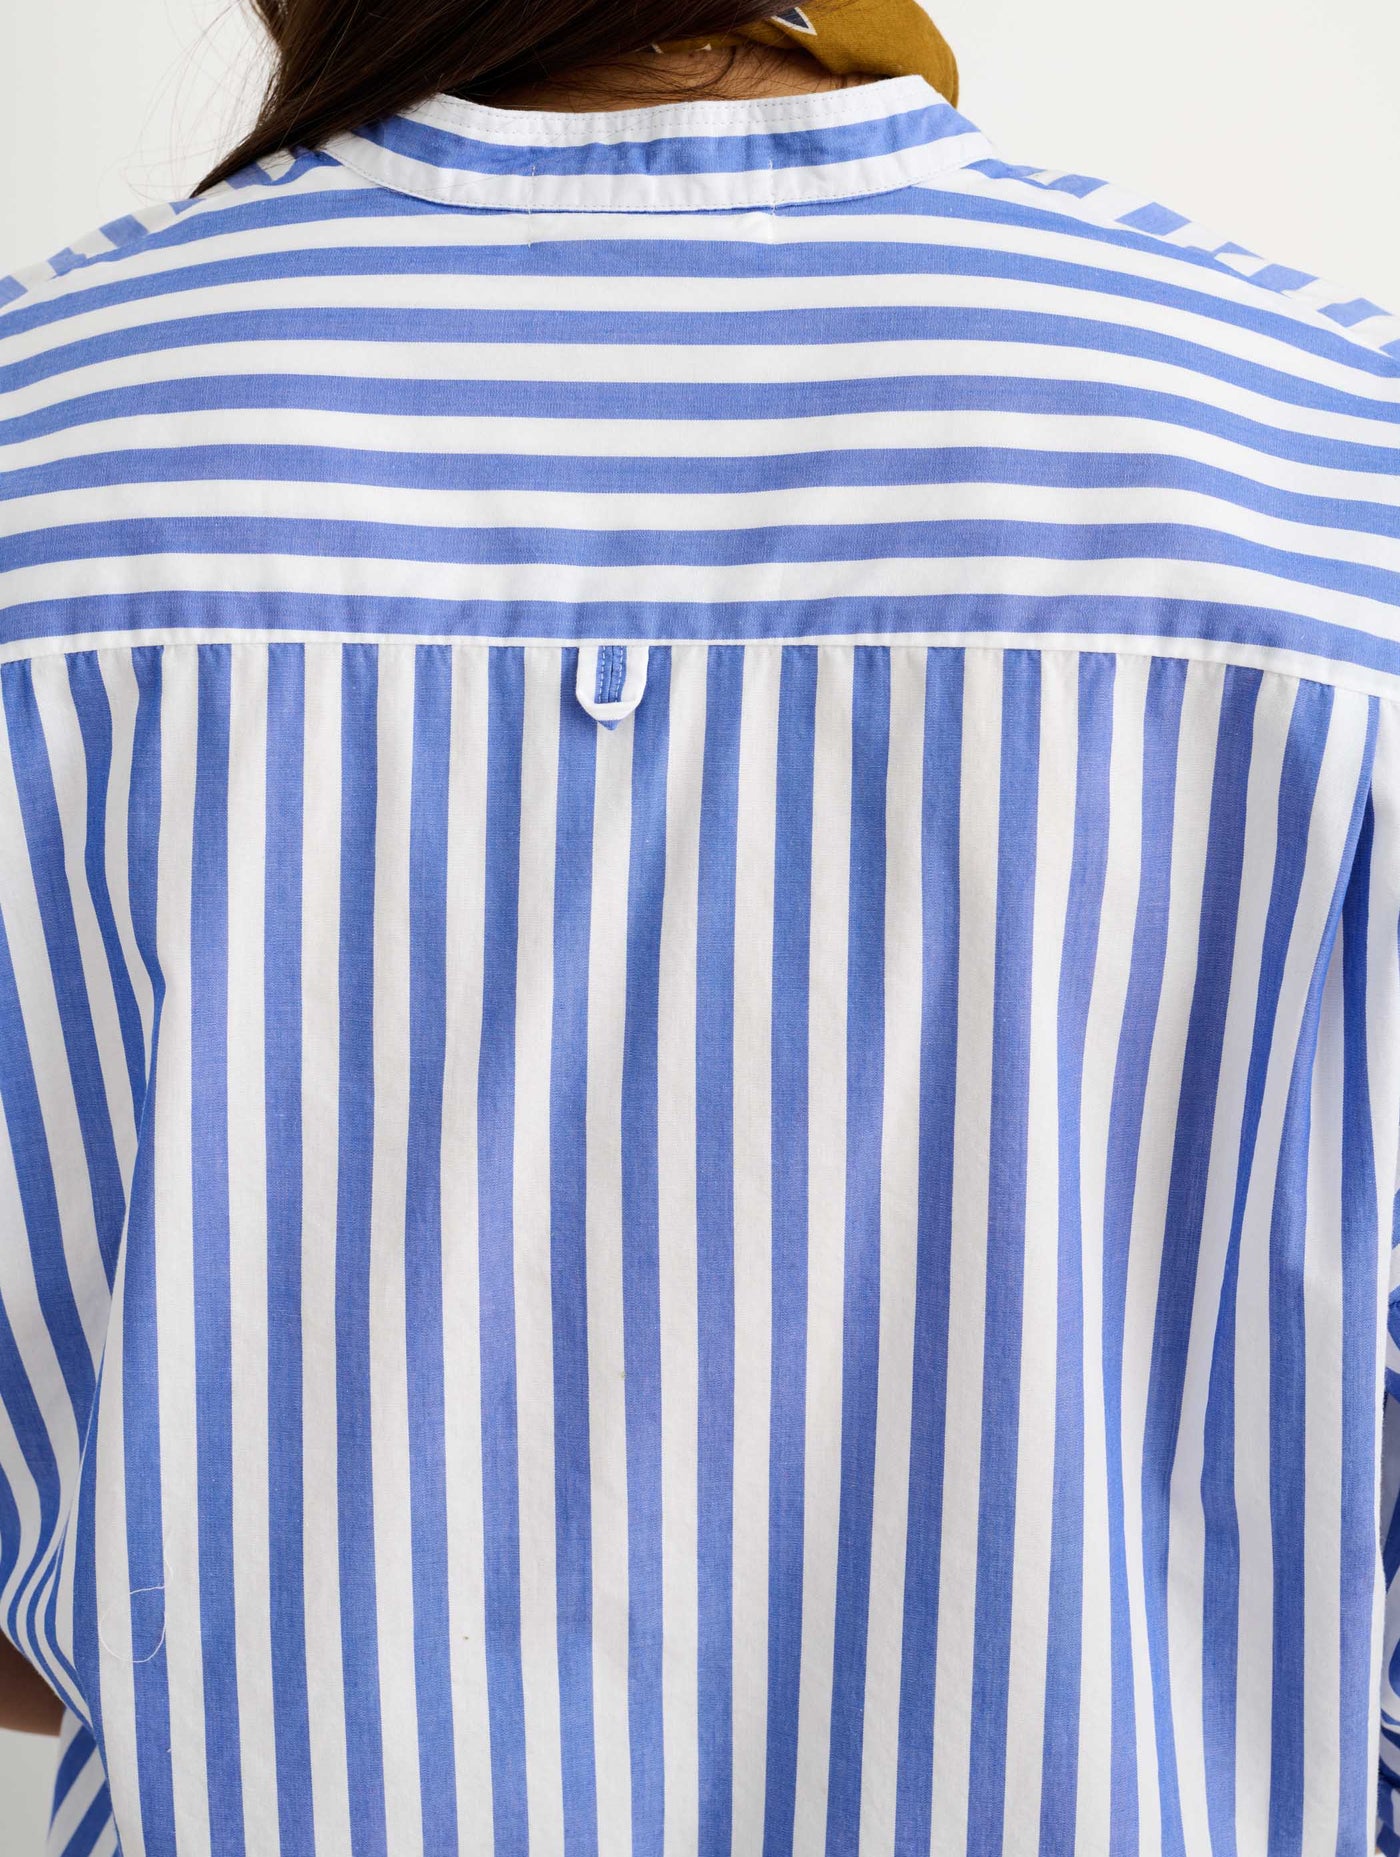 Jo Striped Shirt in Cotton